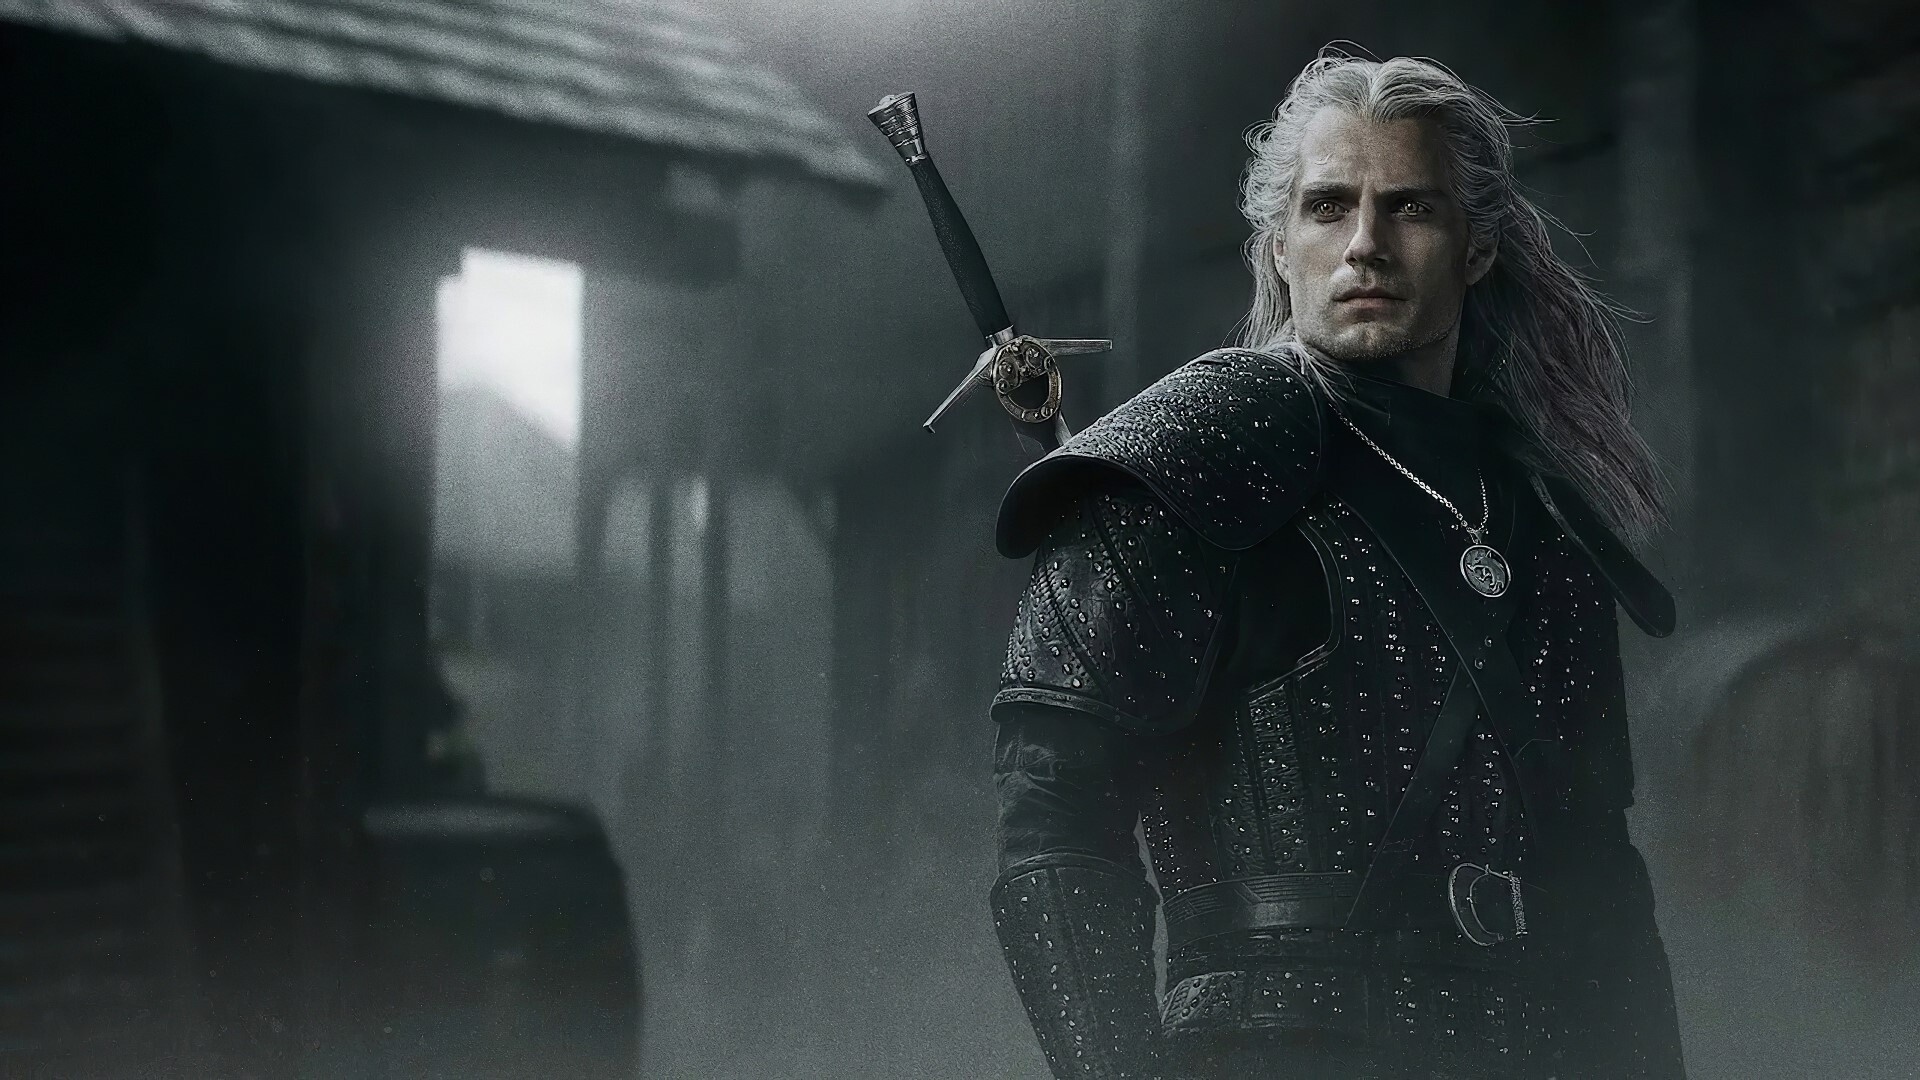 Netflix: The Witcher, Geralt of Rivia, A mutated monster-hunter for hire. 1920x1080 Full HD Wallpaper.